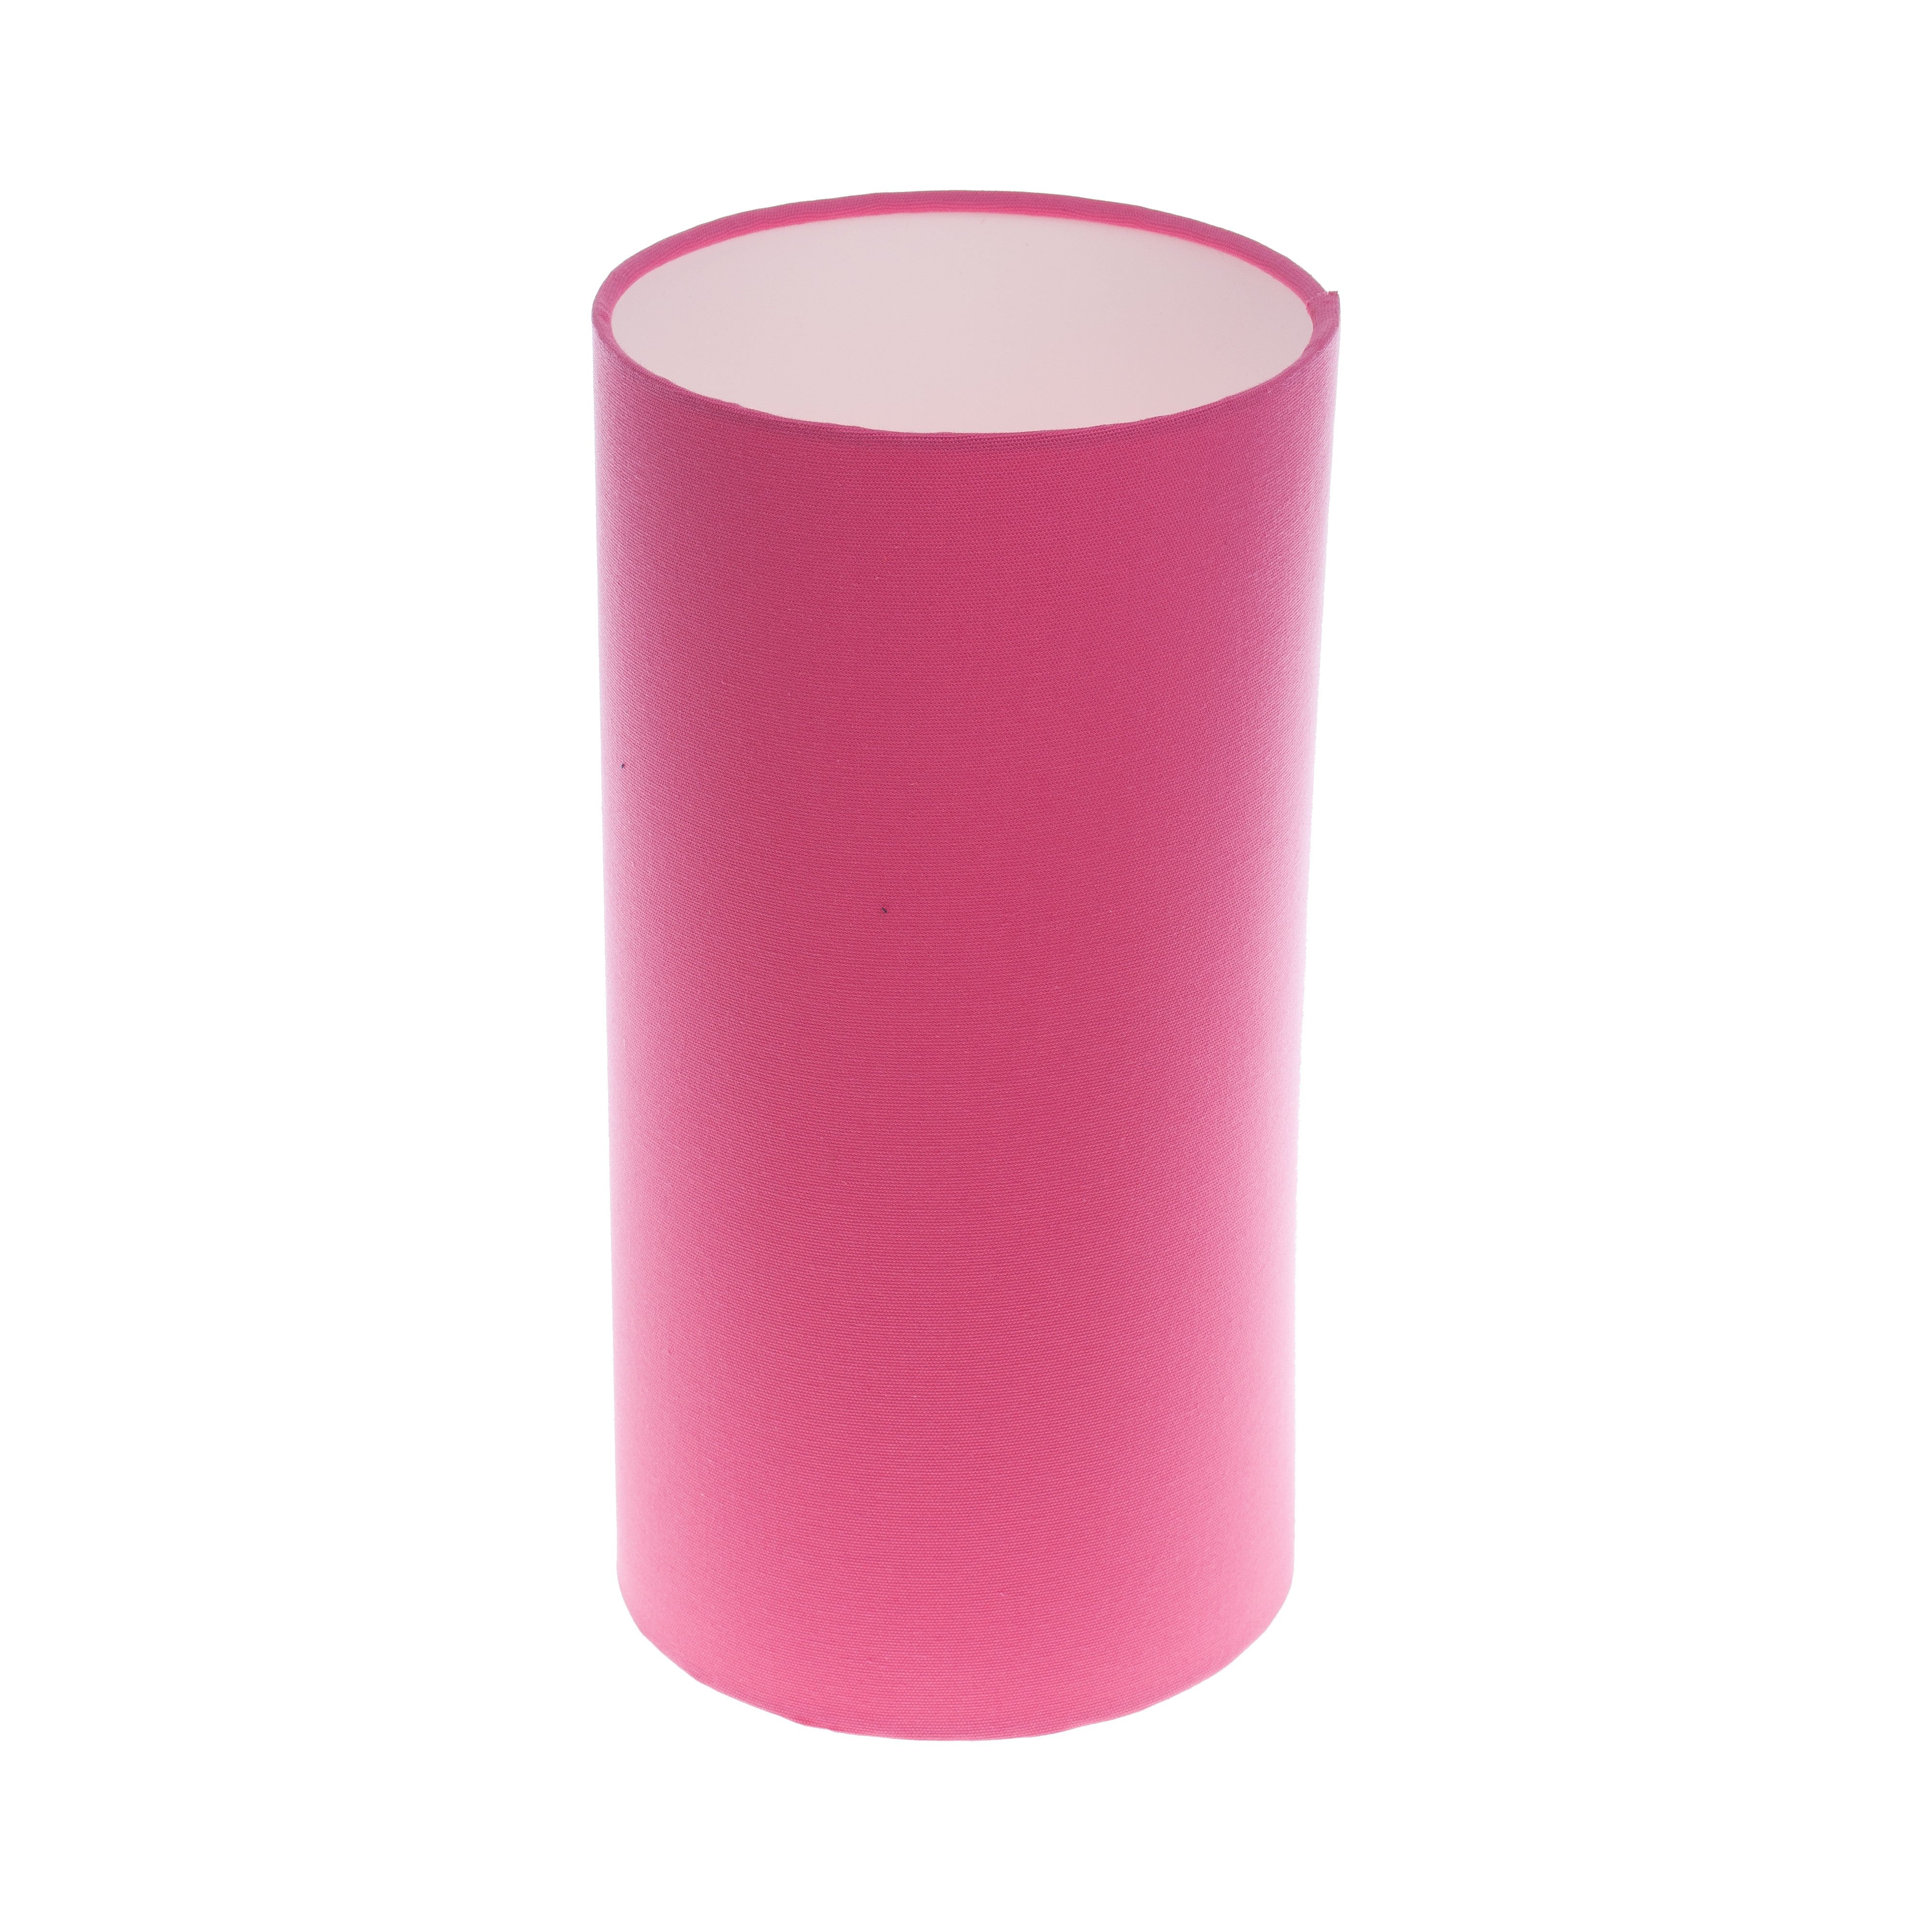 Sorbet Bright Pink Tall Drum Lampshade, Tall Drum Lamp Shade Uk